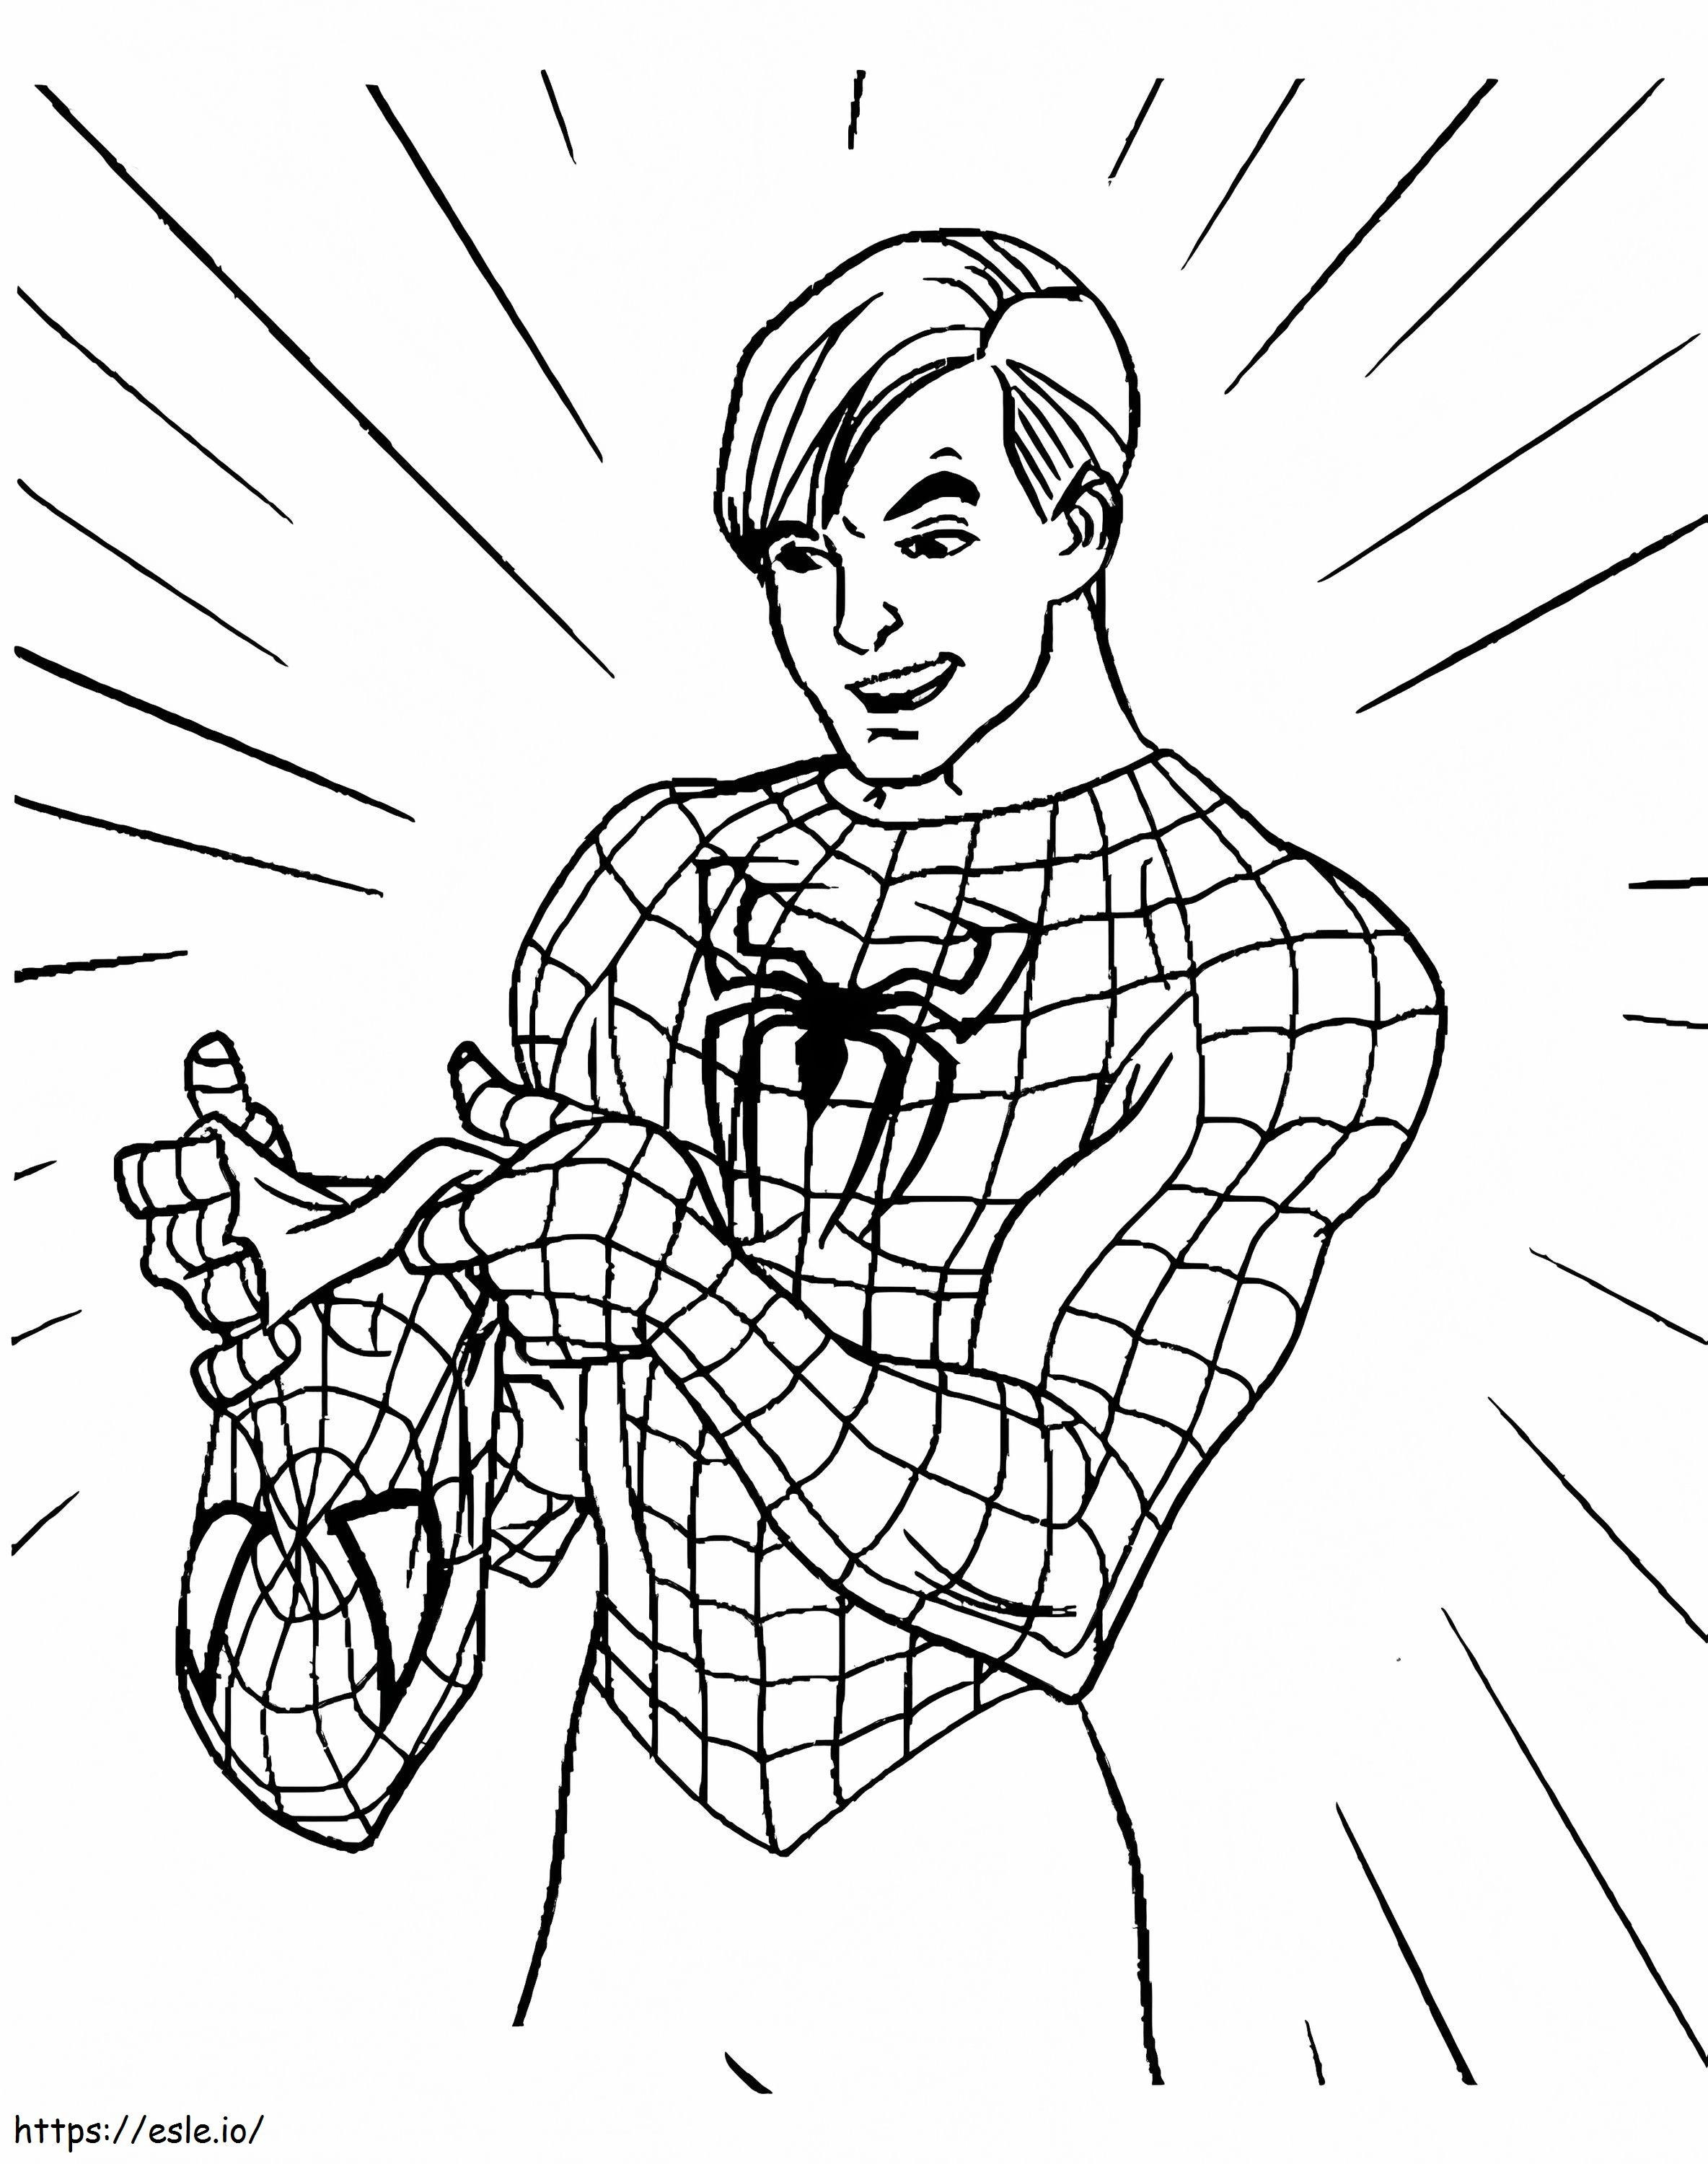 Coloriage Spider-Man Peter Parker à imprimer dessin